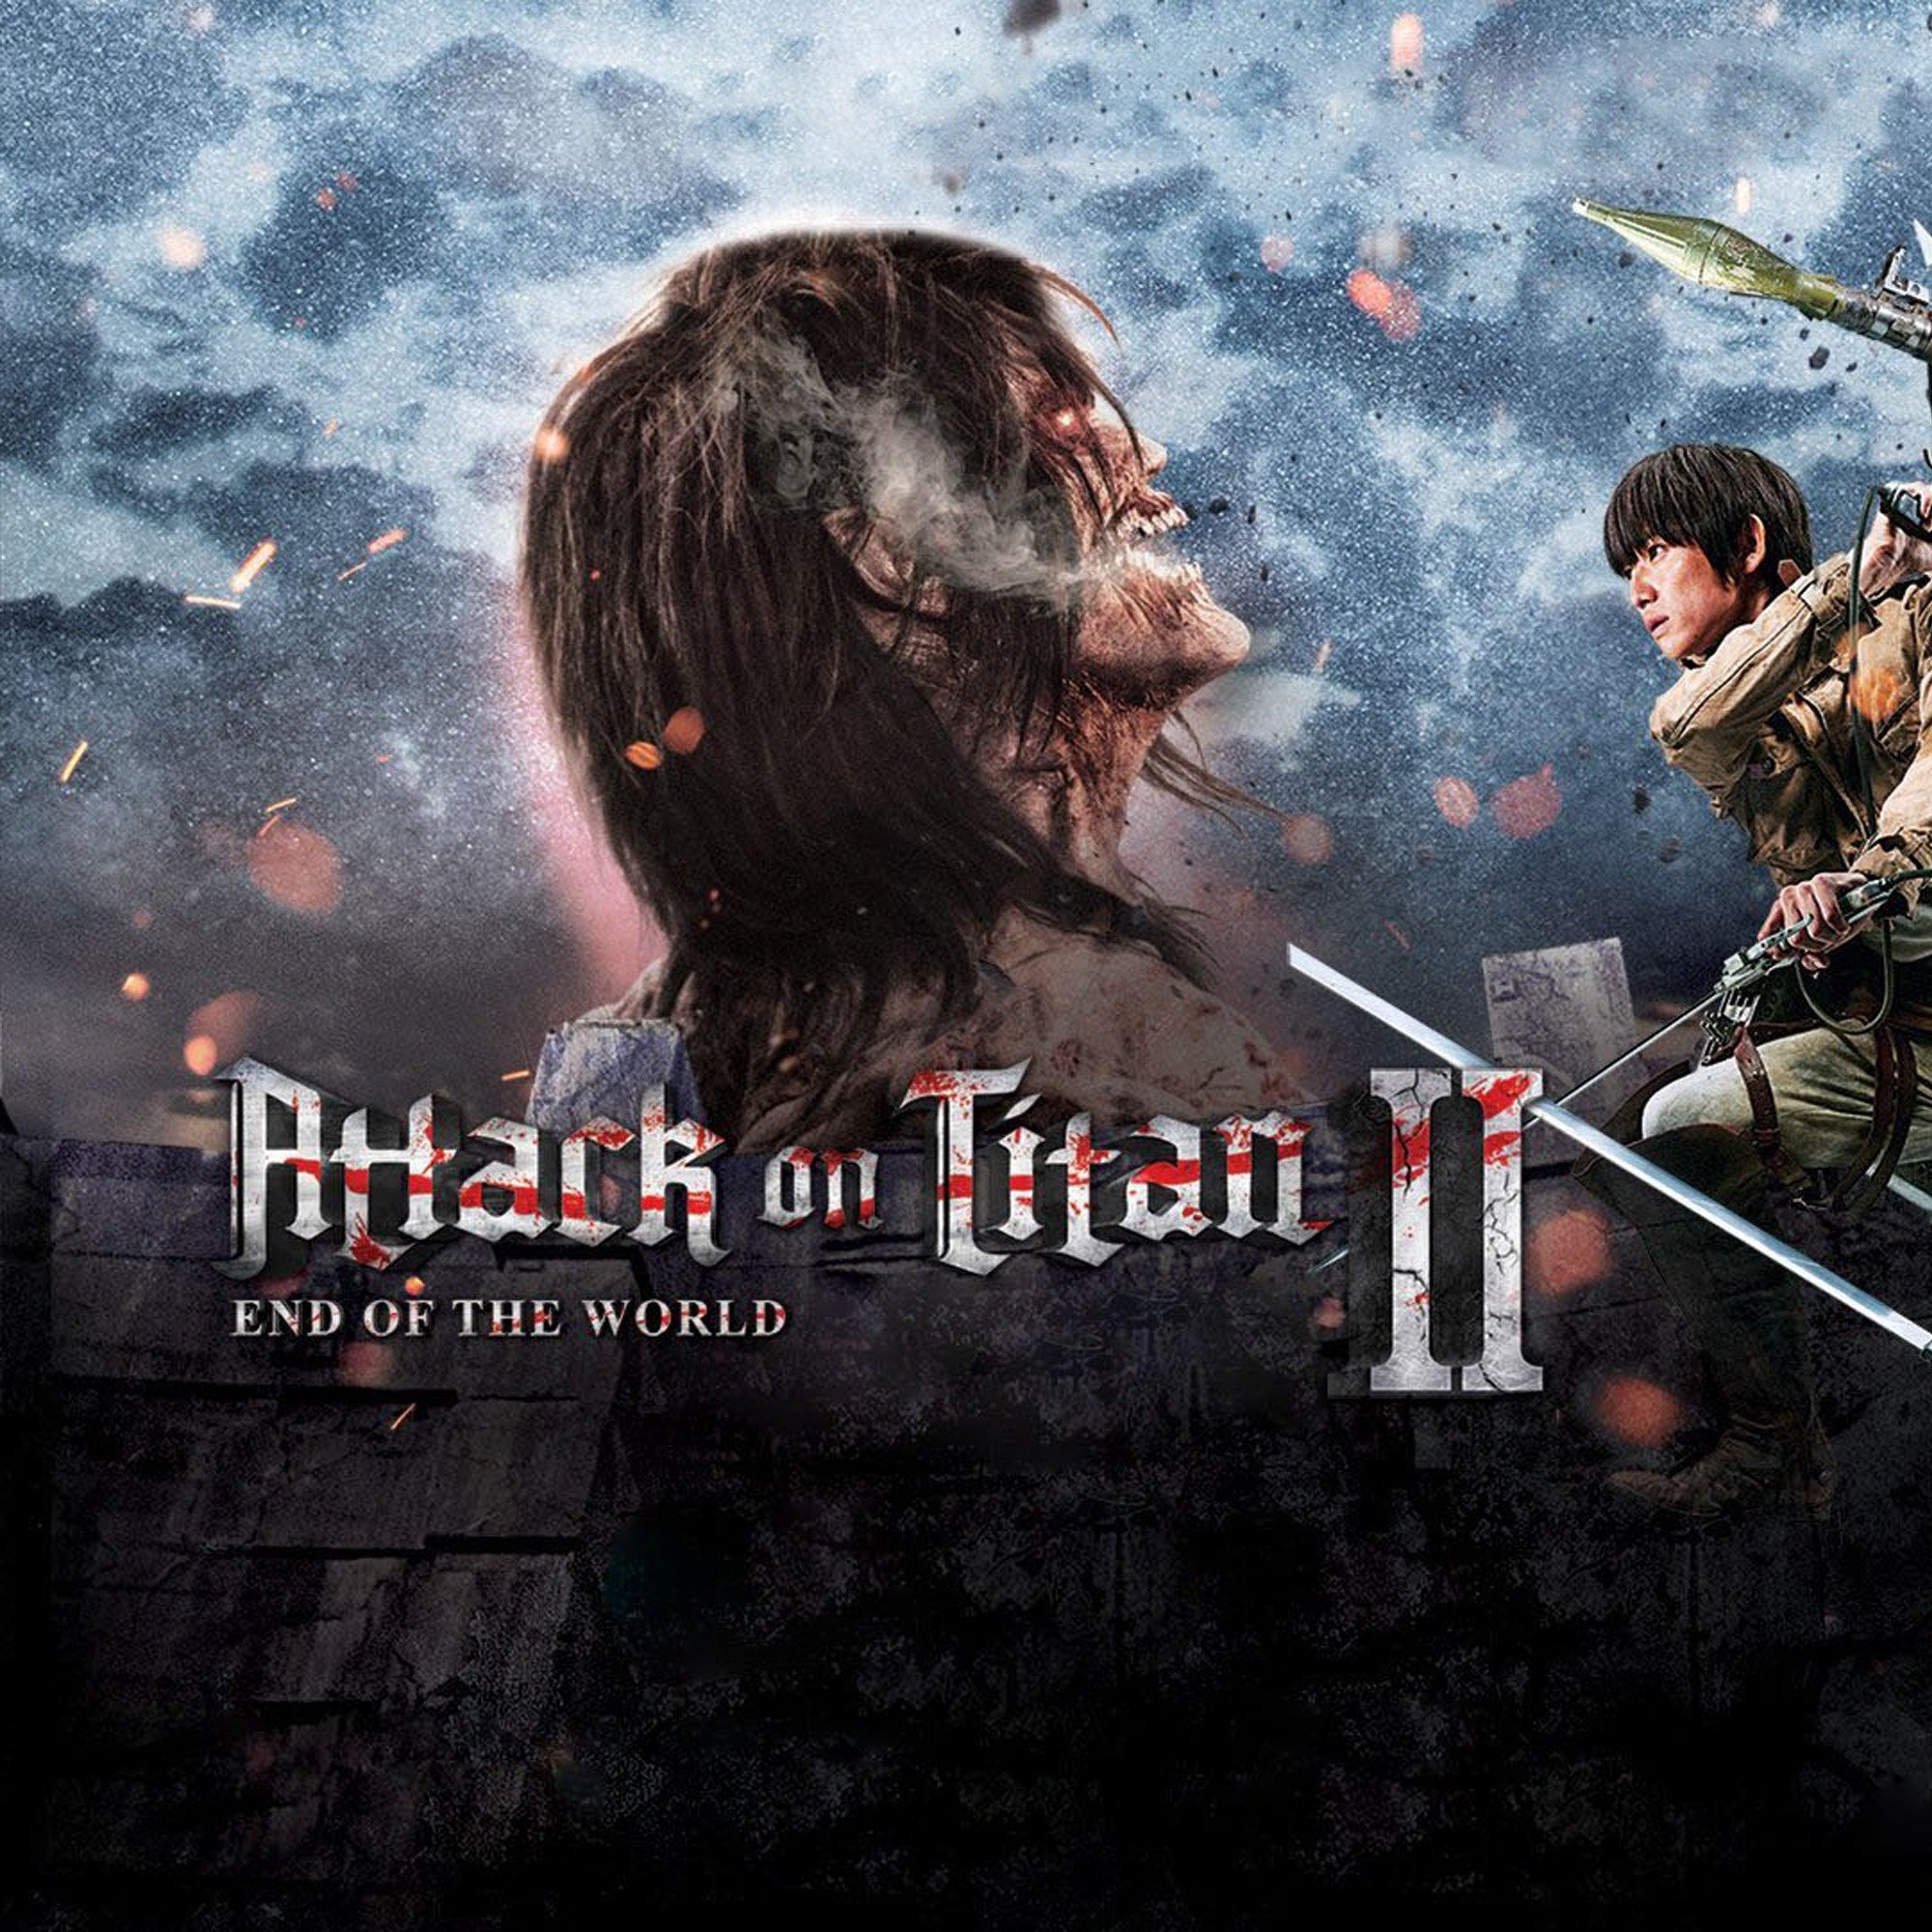 Attack on Titan Part 2 (2015) Full Movie Online